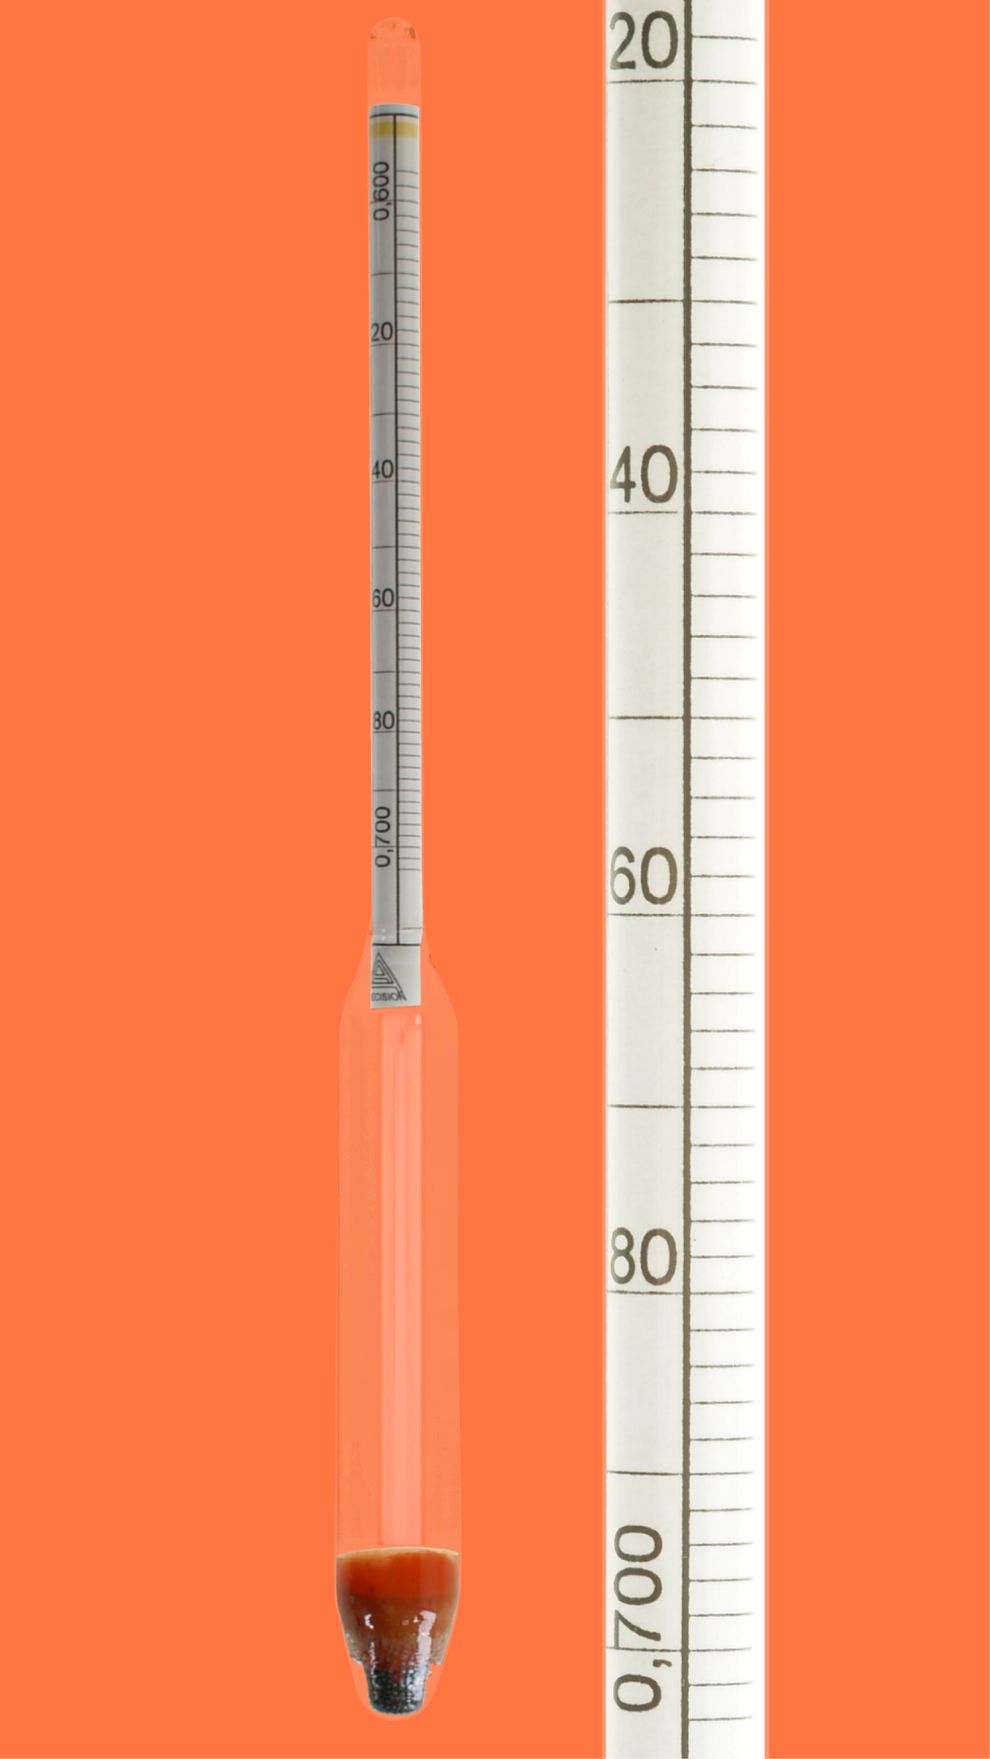 Aräometer, DIN 12791, M100, 0,60-0,70:0,0020g/cm³, Bezugstemp. 20°C, ohne Thermometer